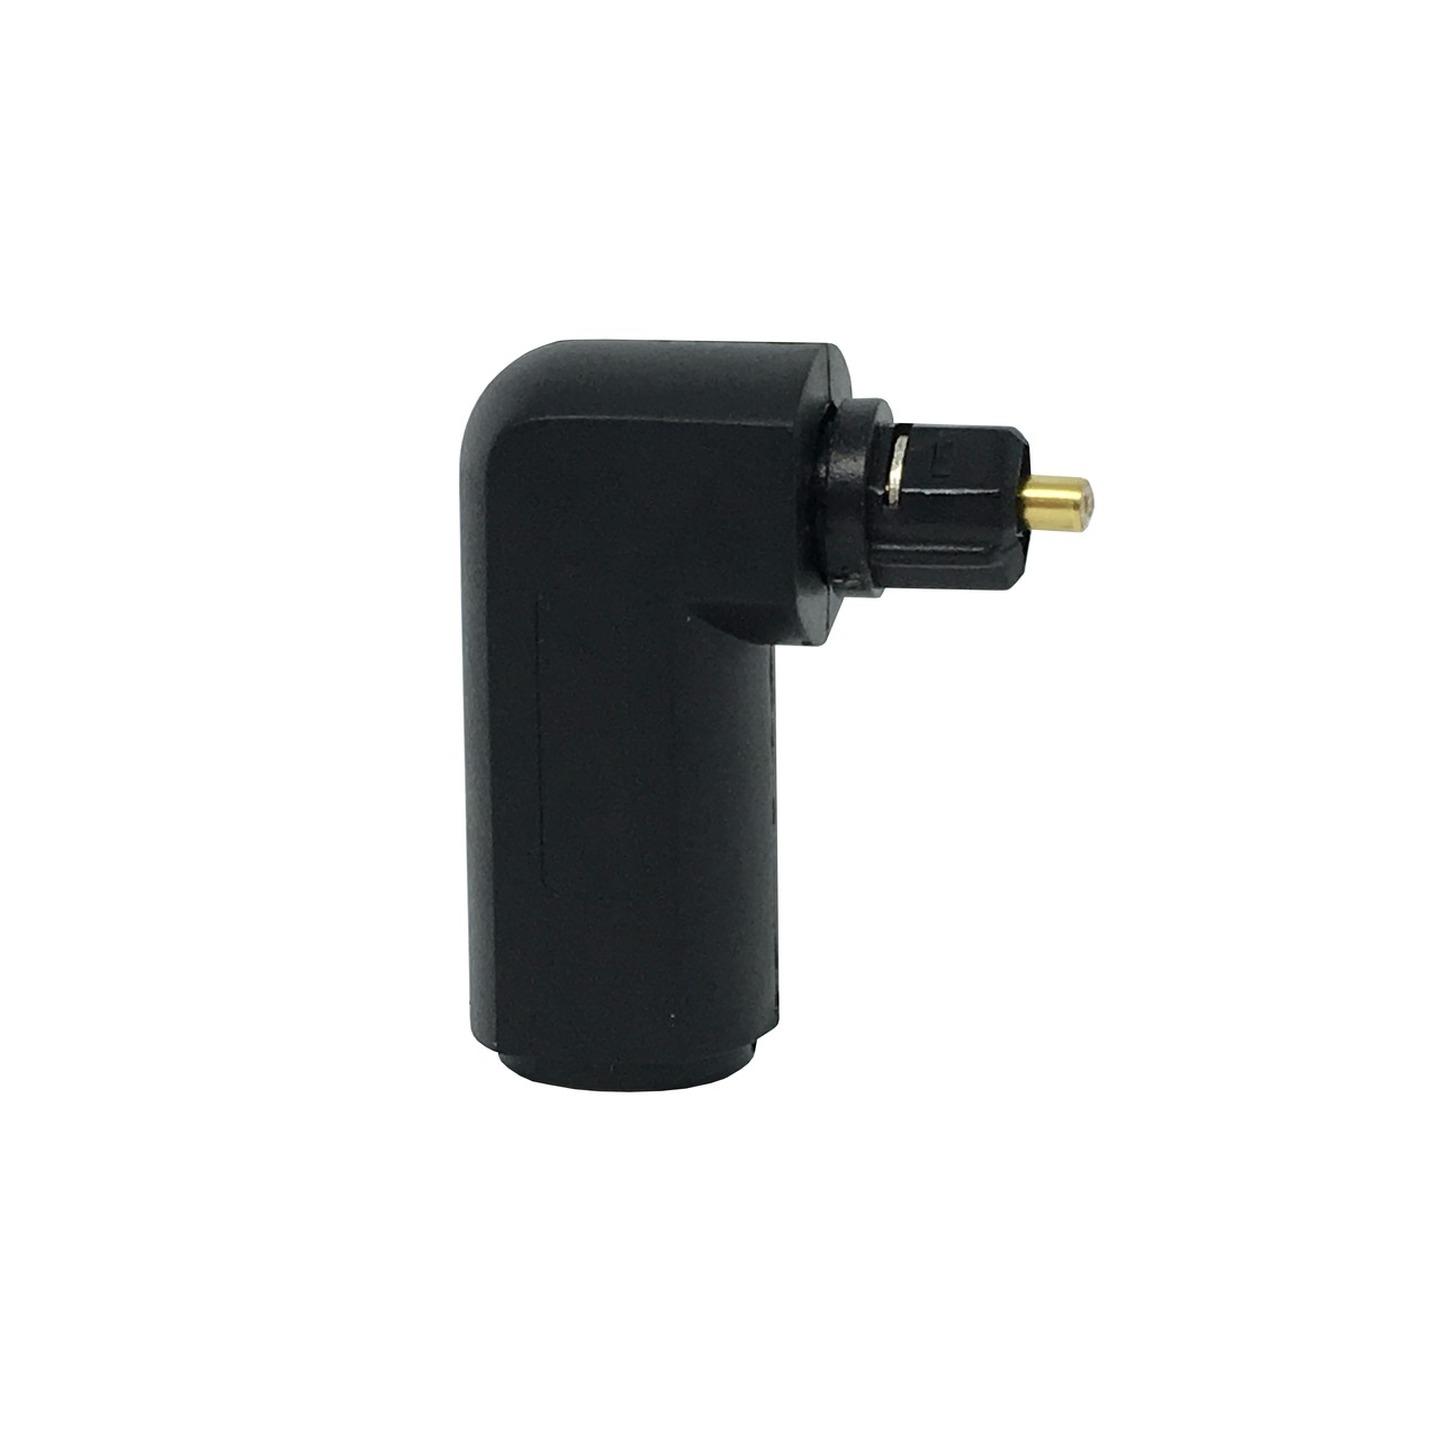 TOSLINK Plug to Socket Right Angle Adaptor